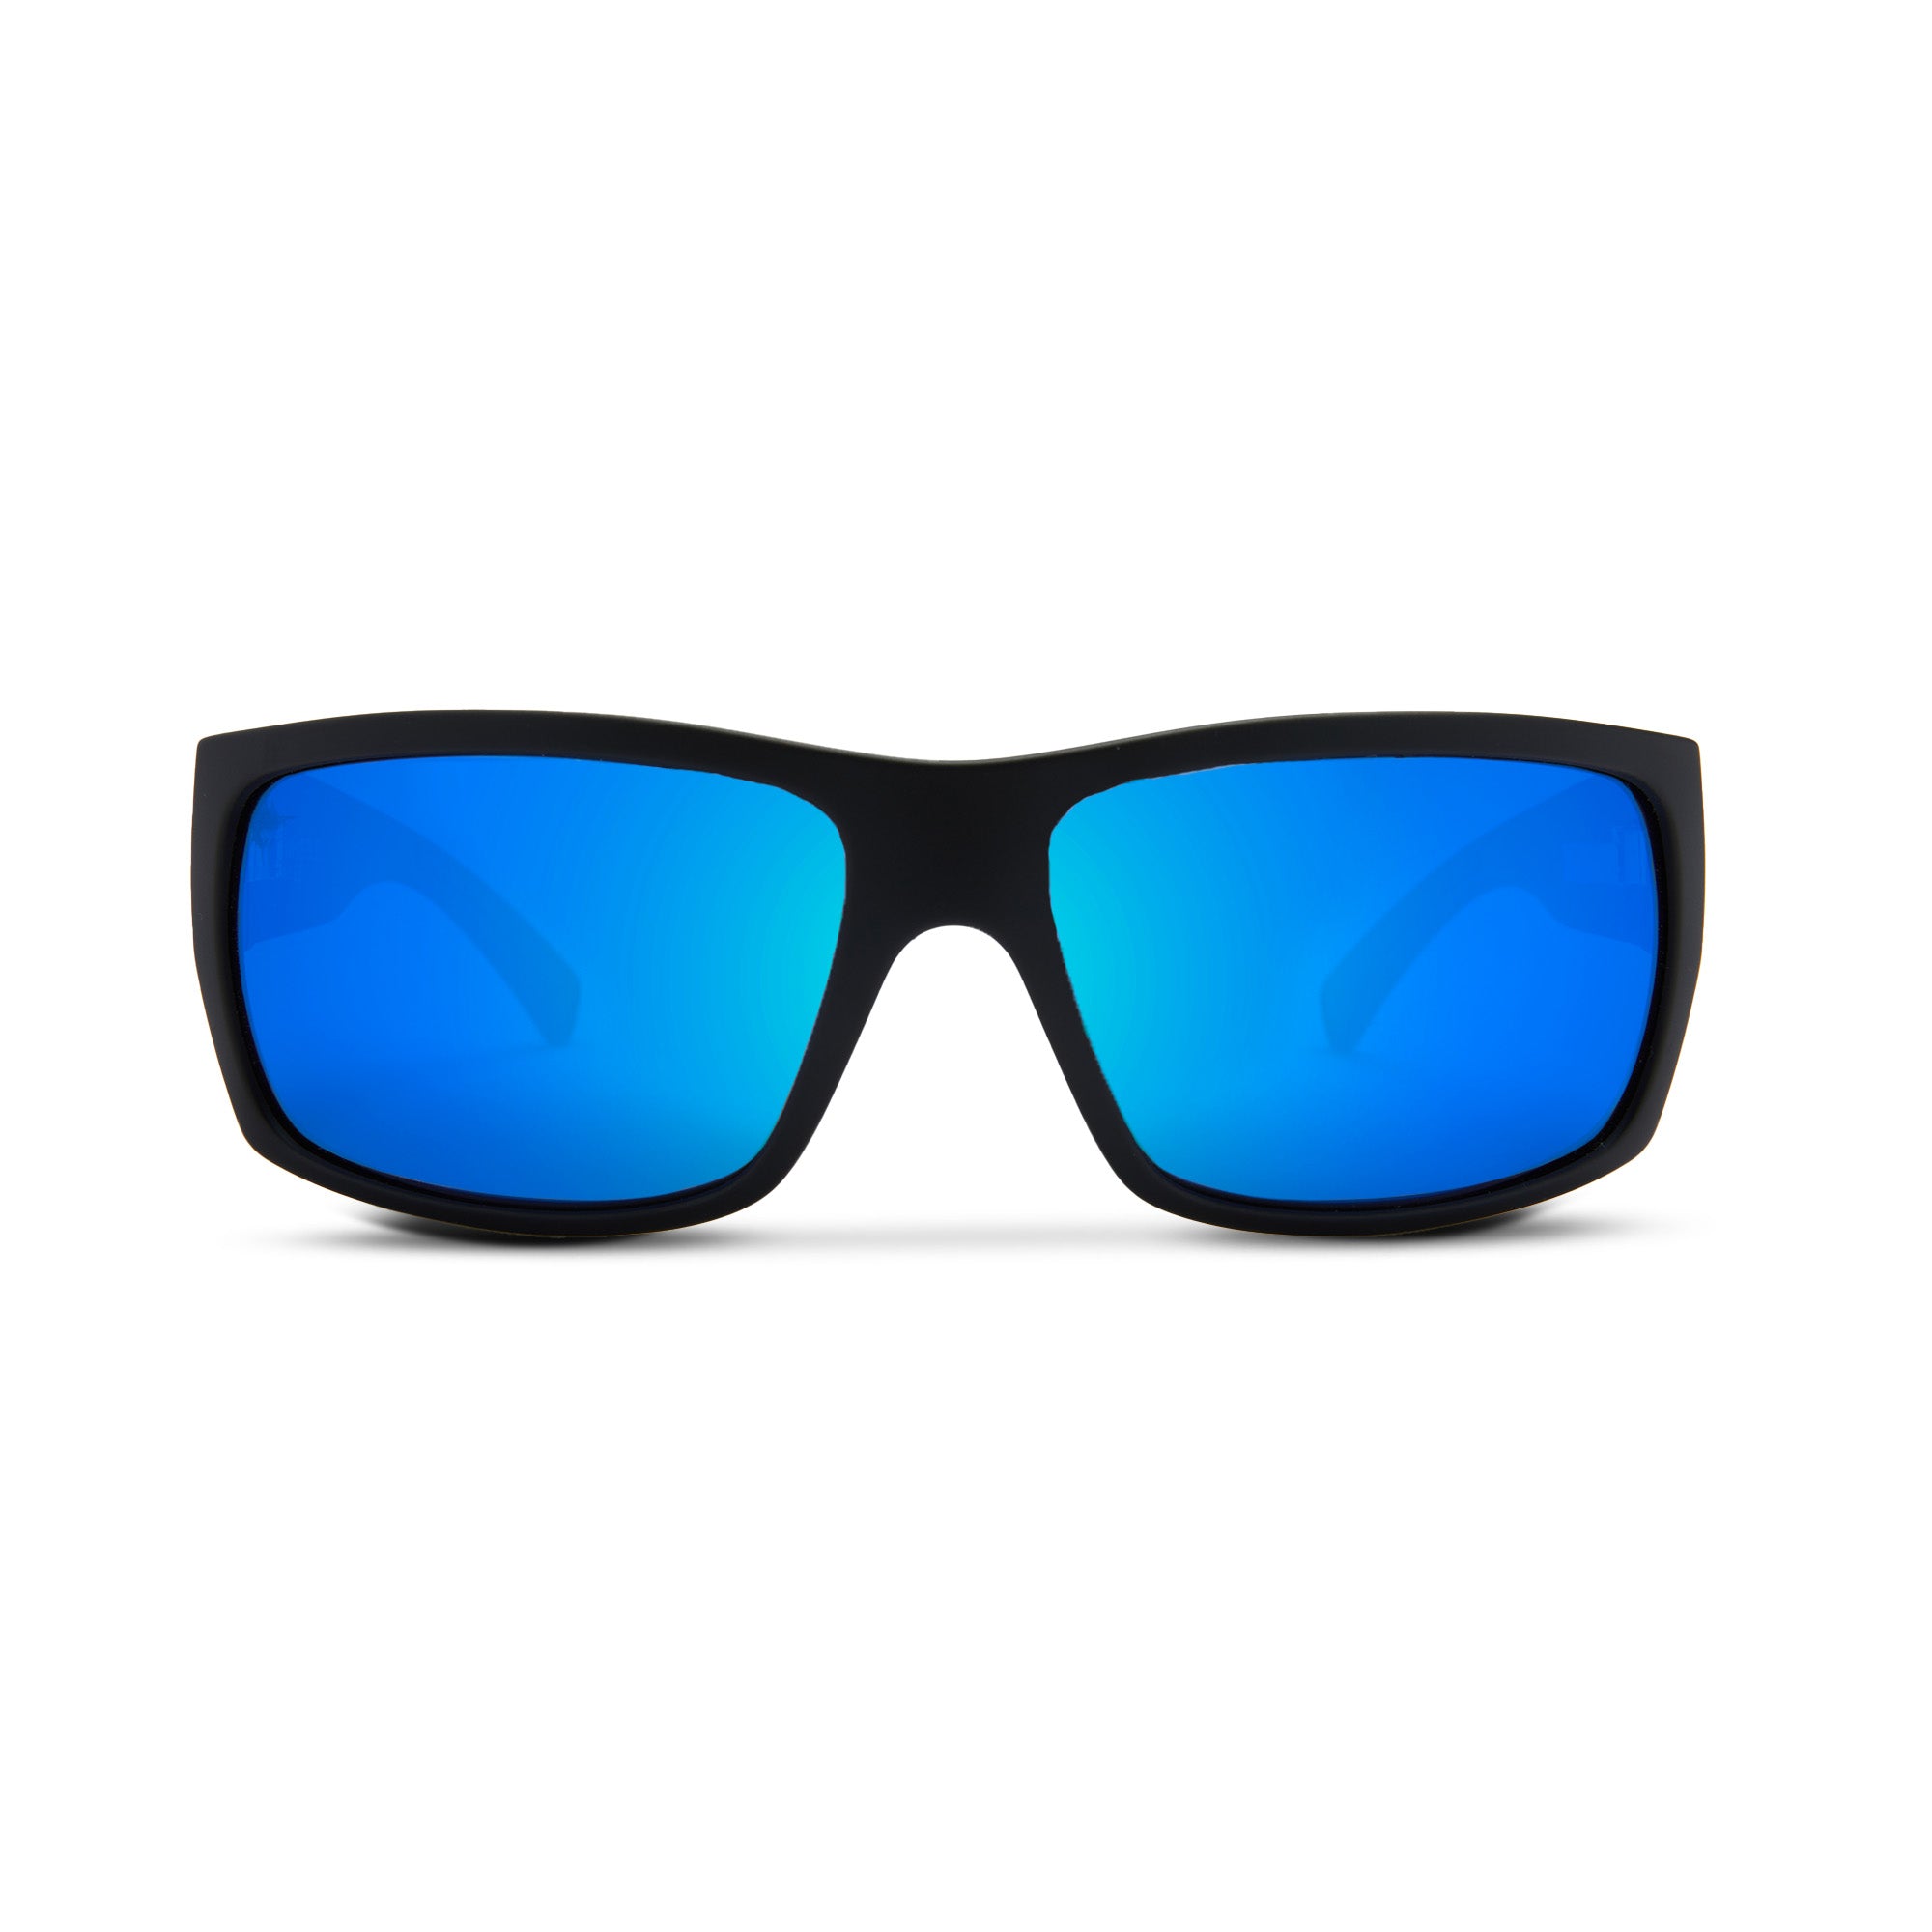 Amazon.com: Blue Polarized Sunglasses